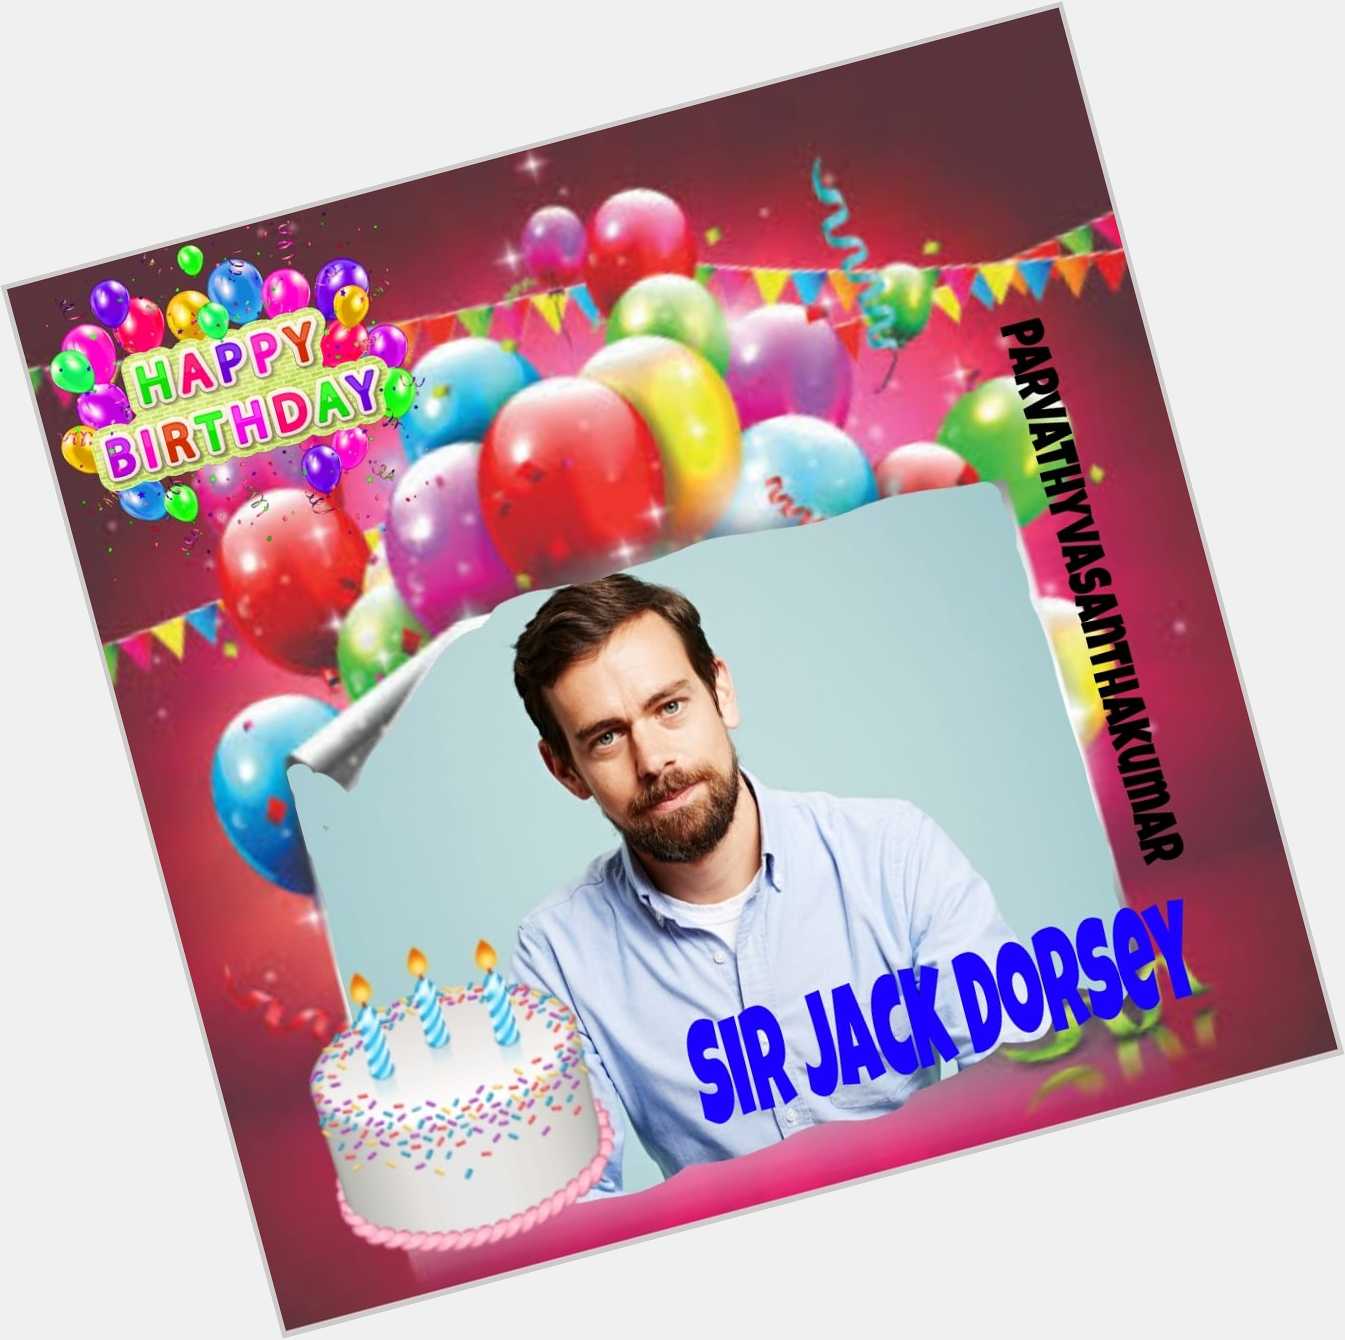 Happy birthday
Jack Dorsey   